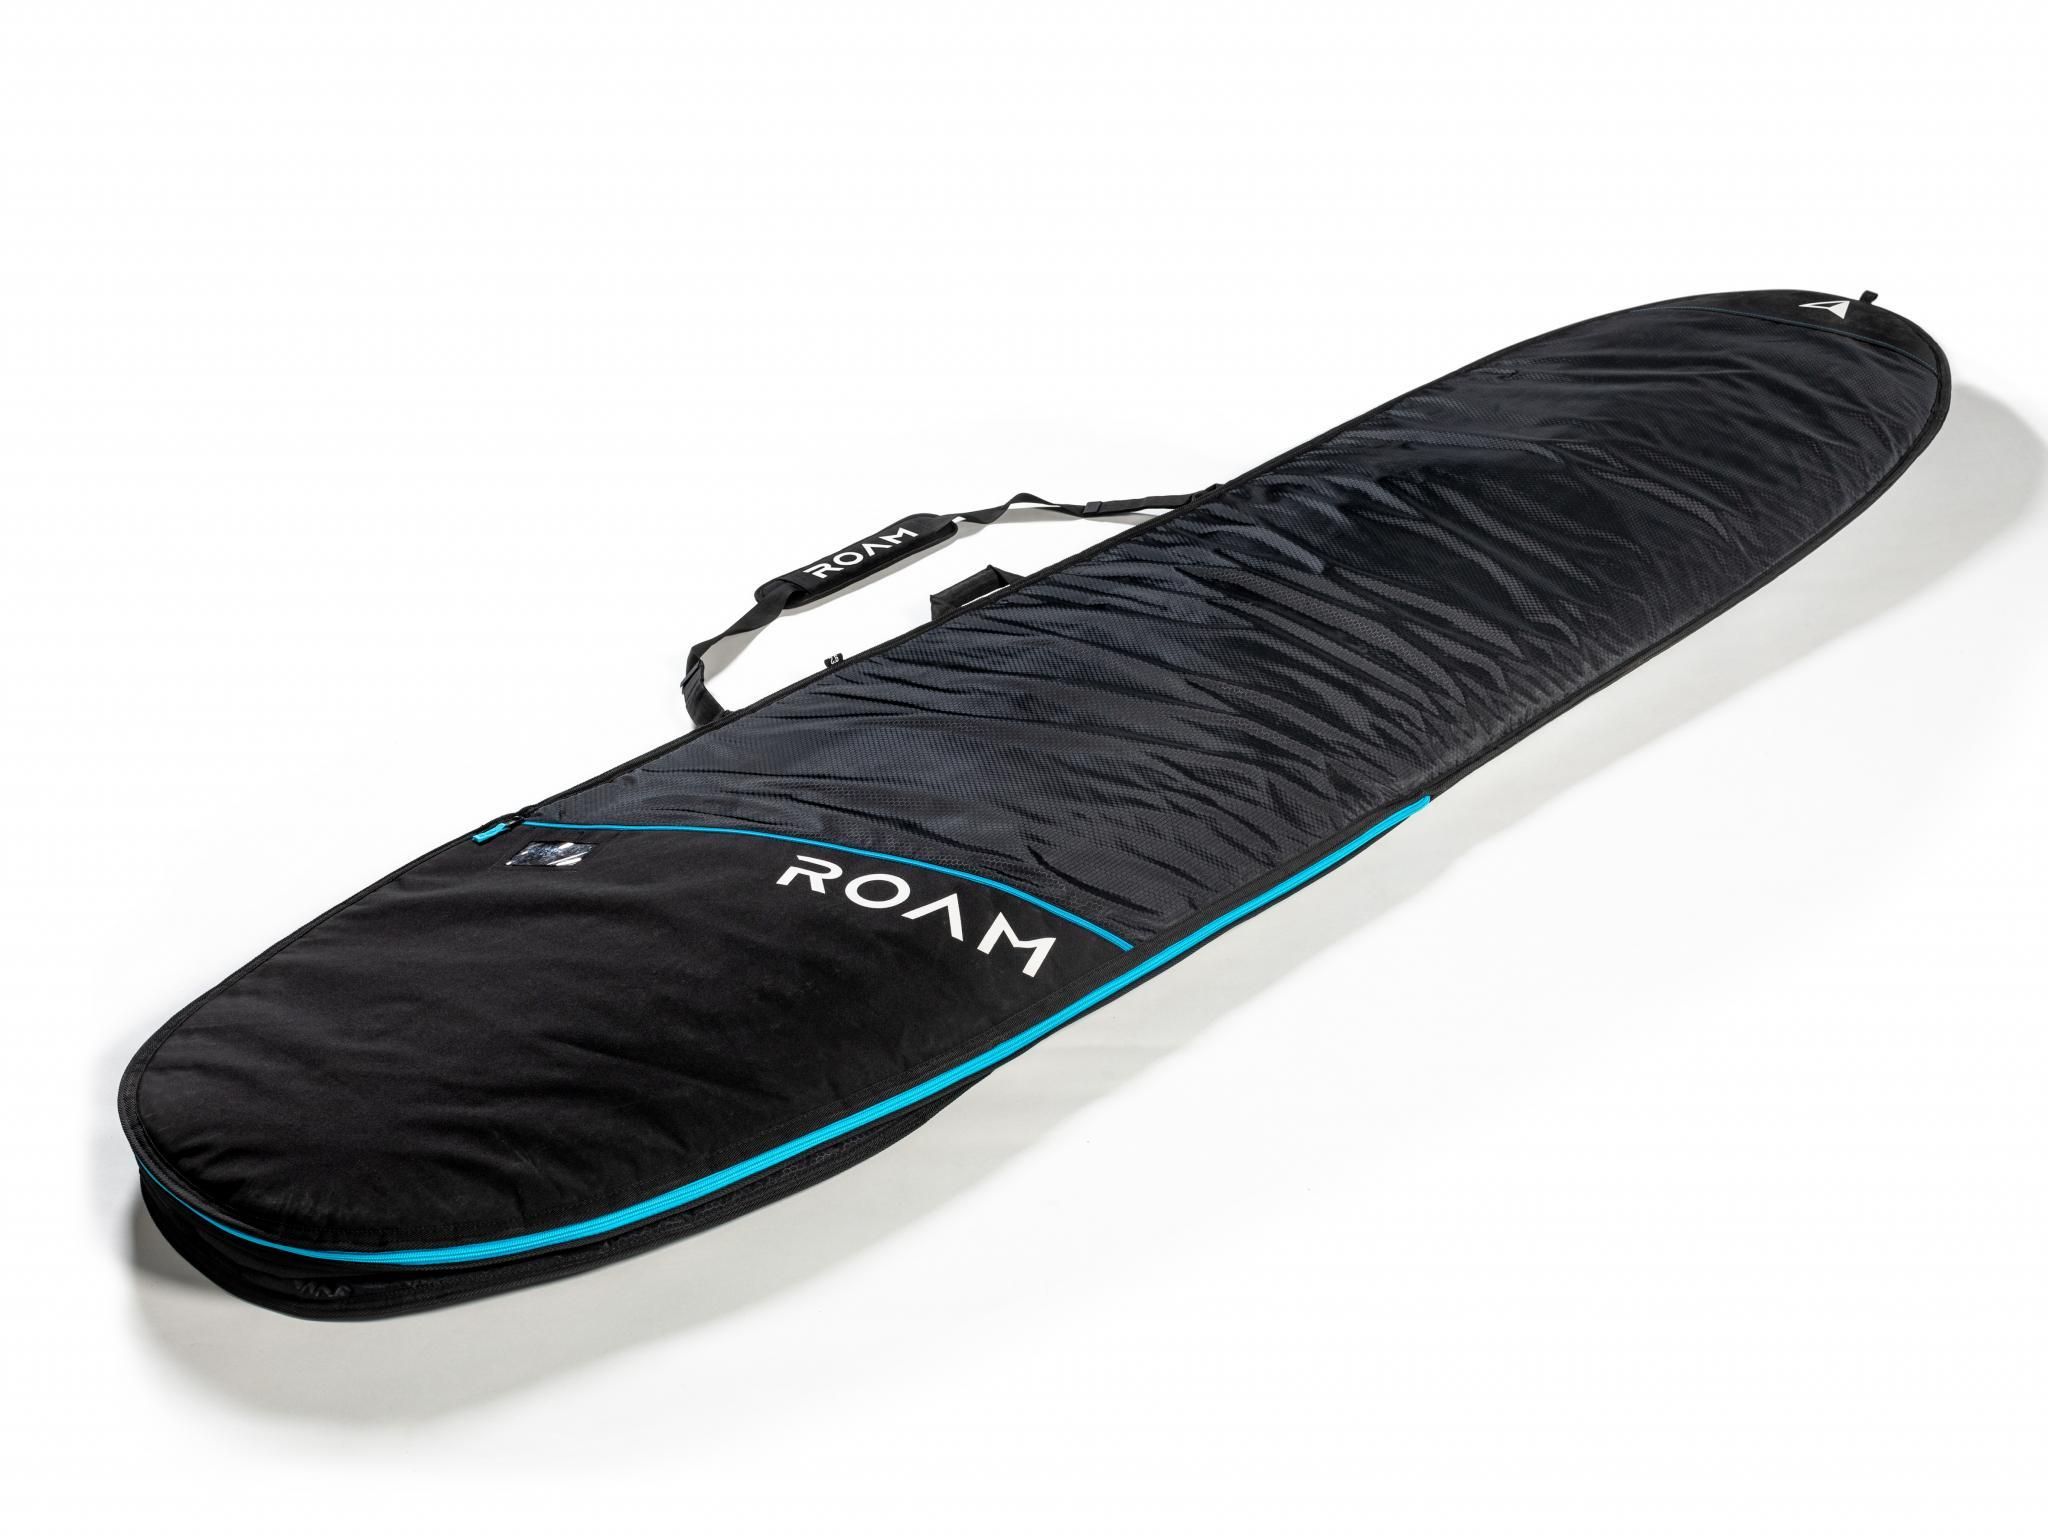 Housse Surf longboard Tech 9'2 de Roam dessus